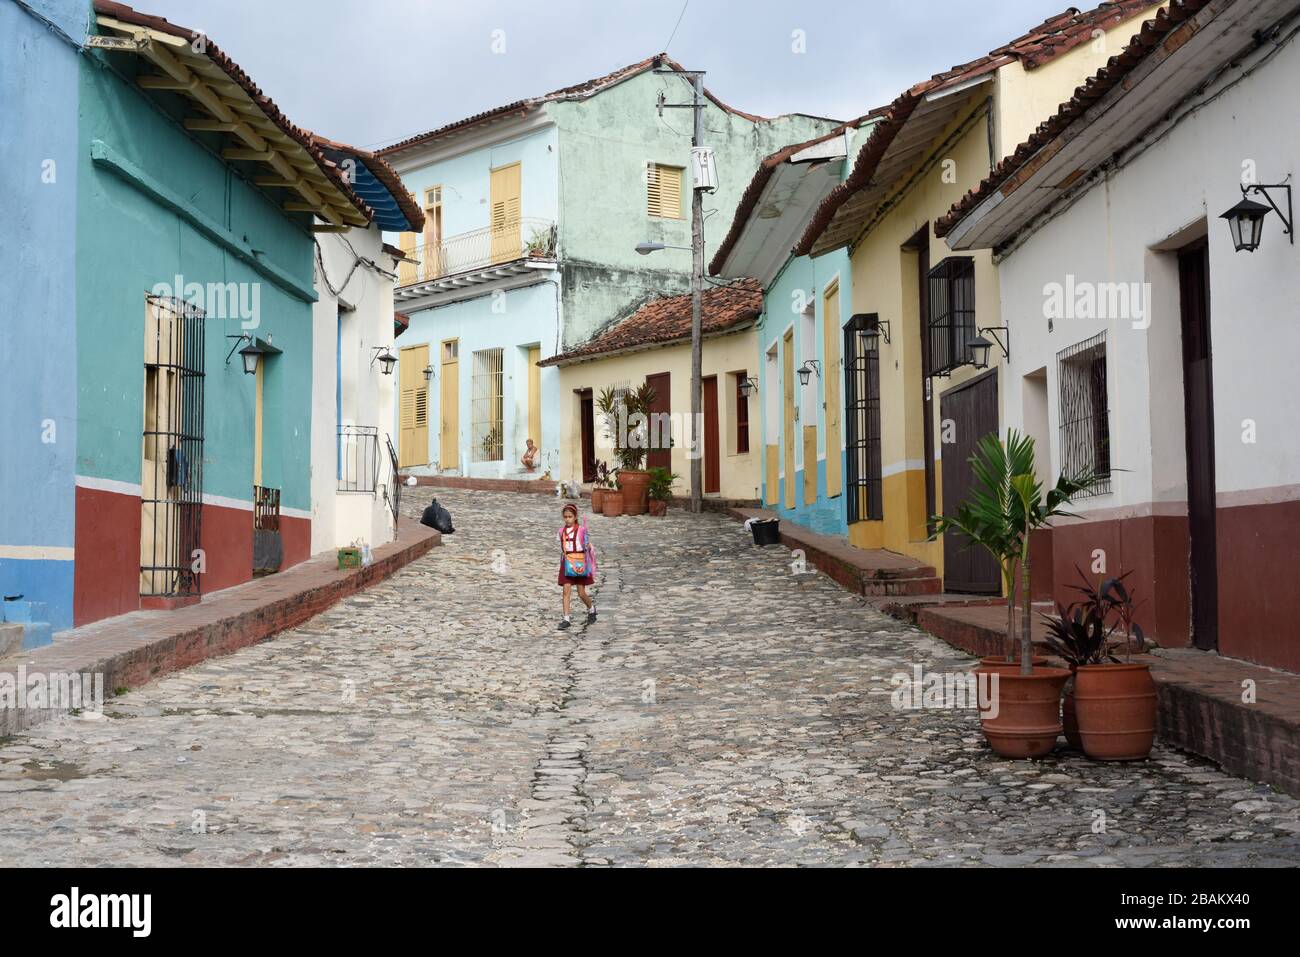 People, child, house, street, 2014, Cuba Stock Photo